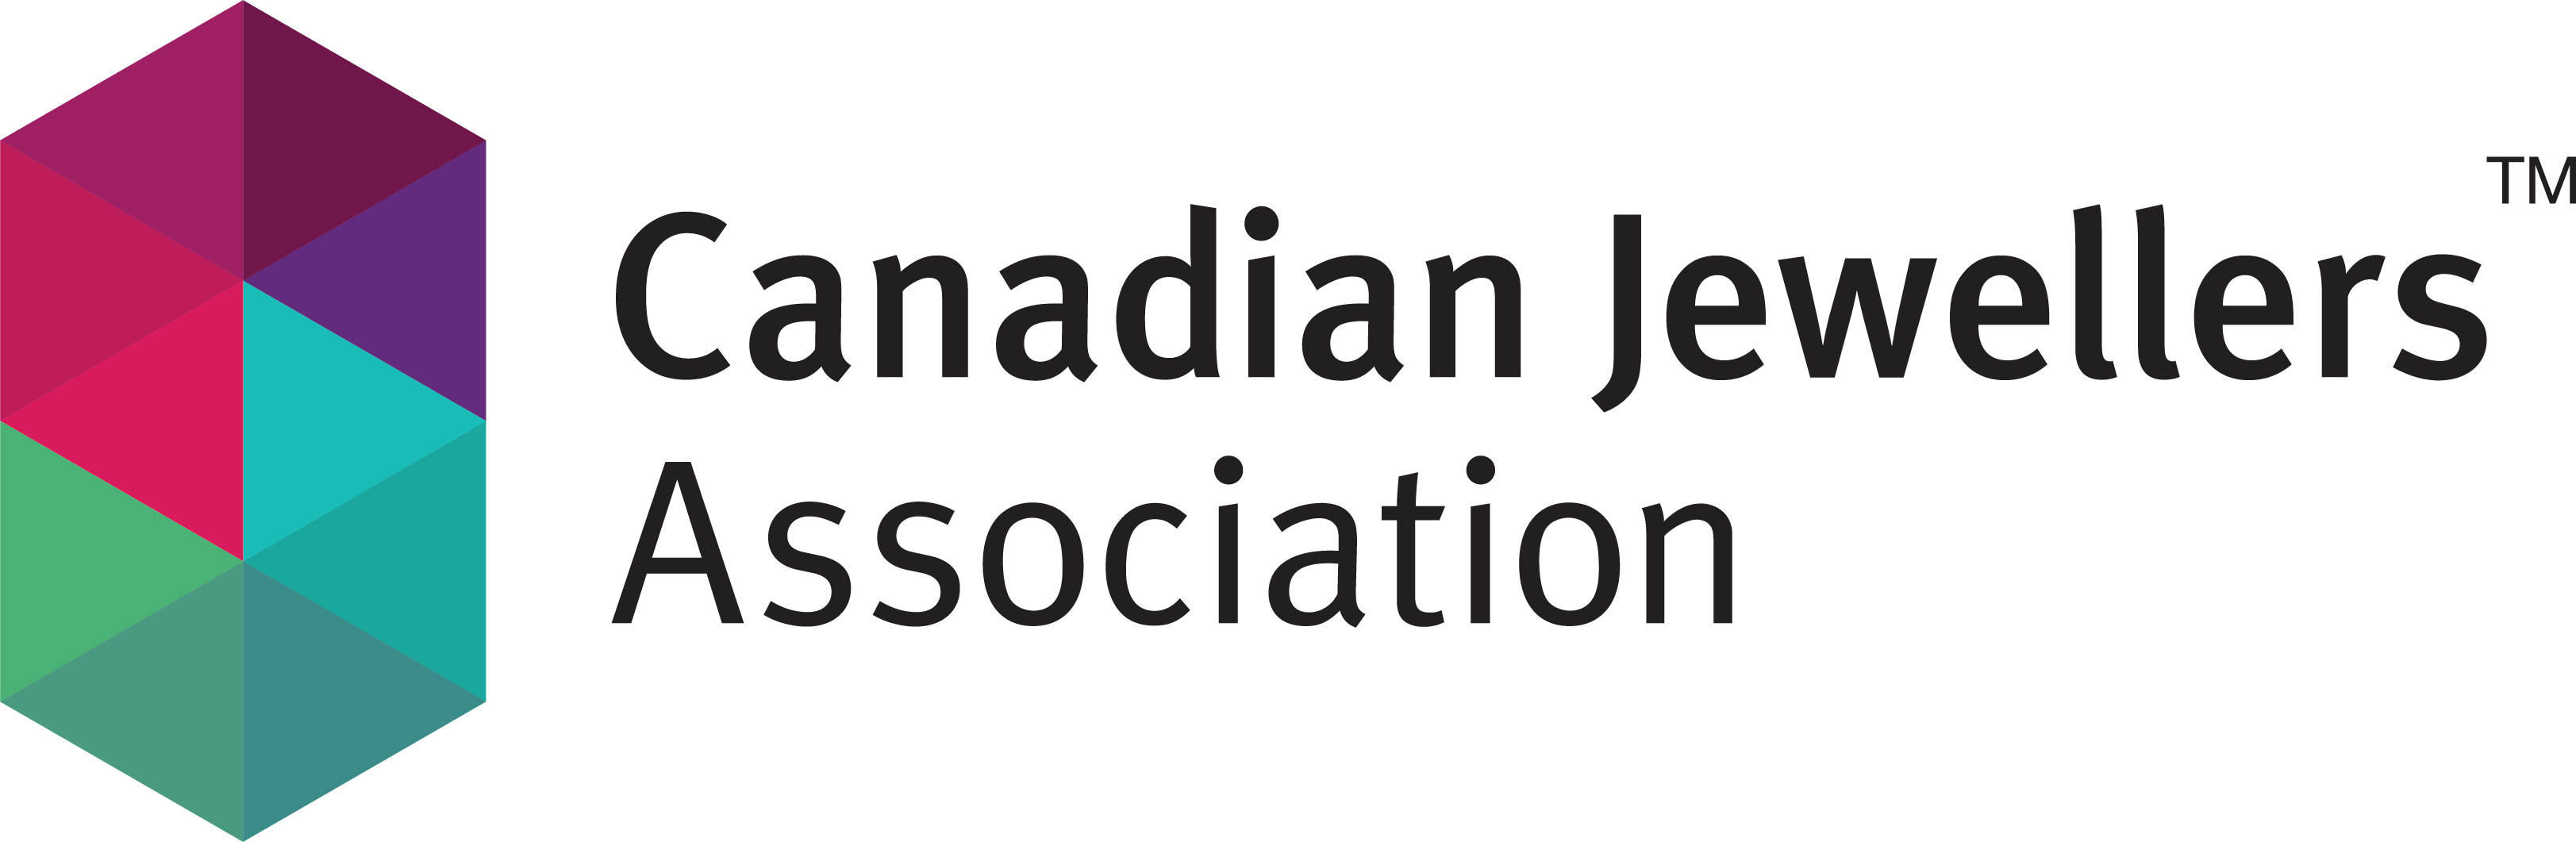 Canadian Jewelers Association Logo